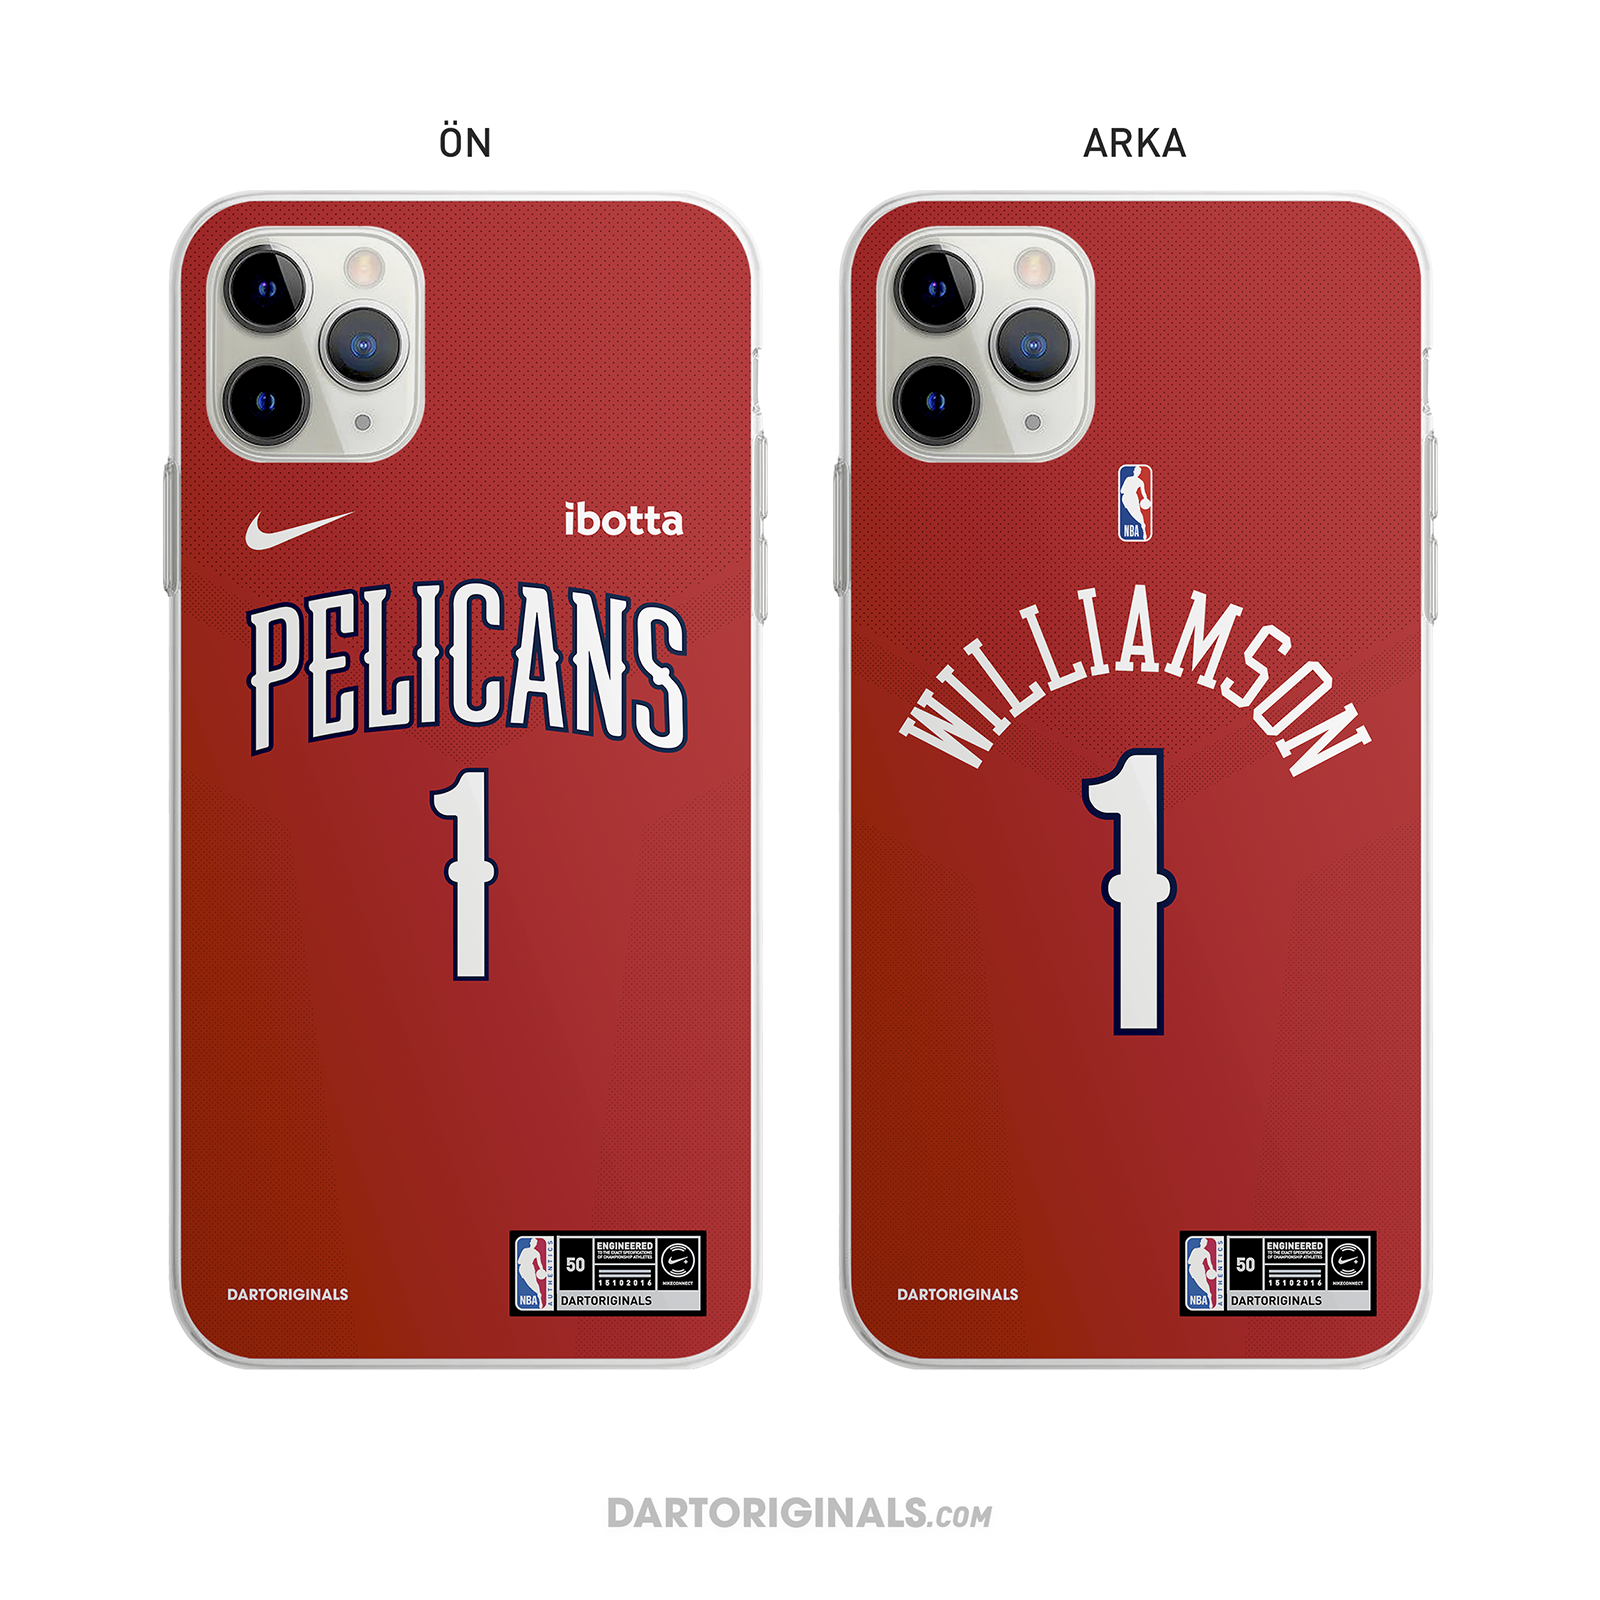 Pelicans: Statement Edition - 2K21